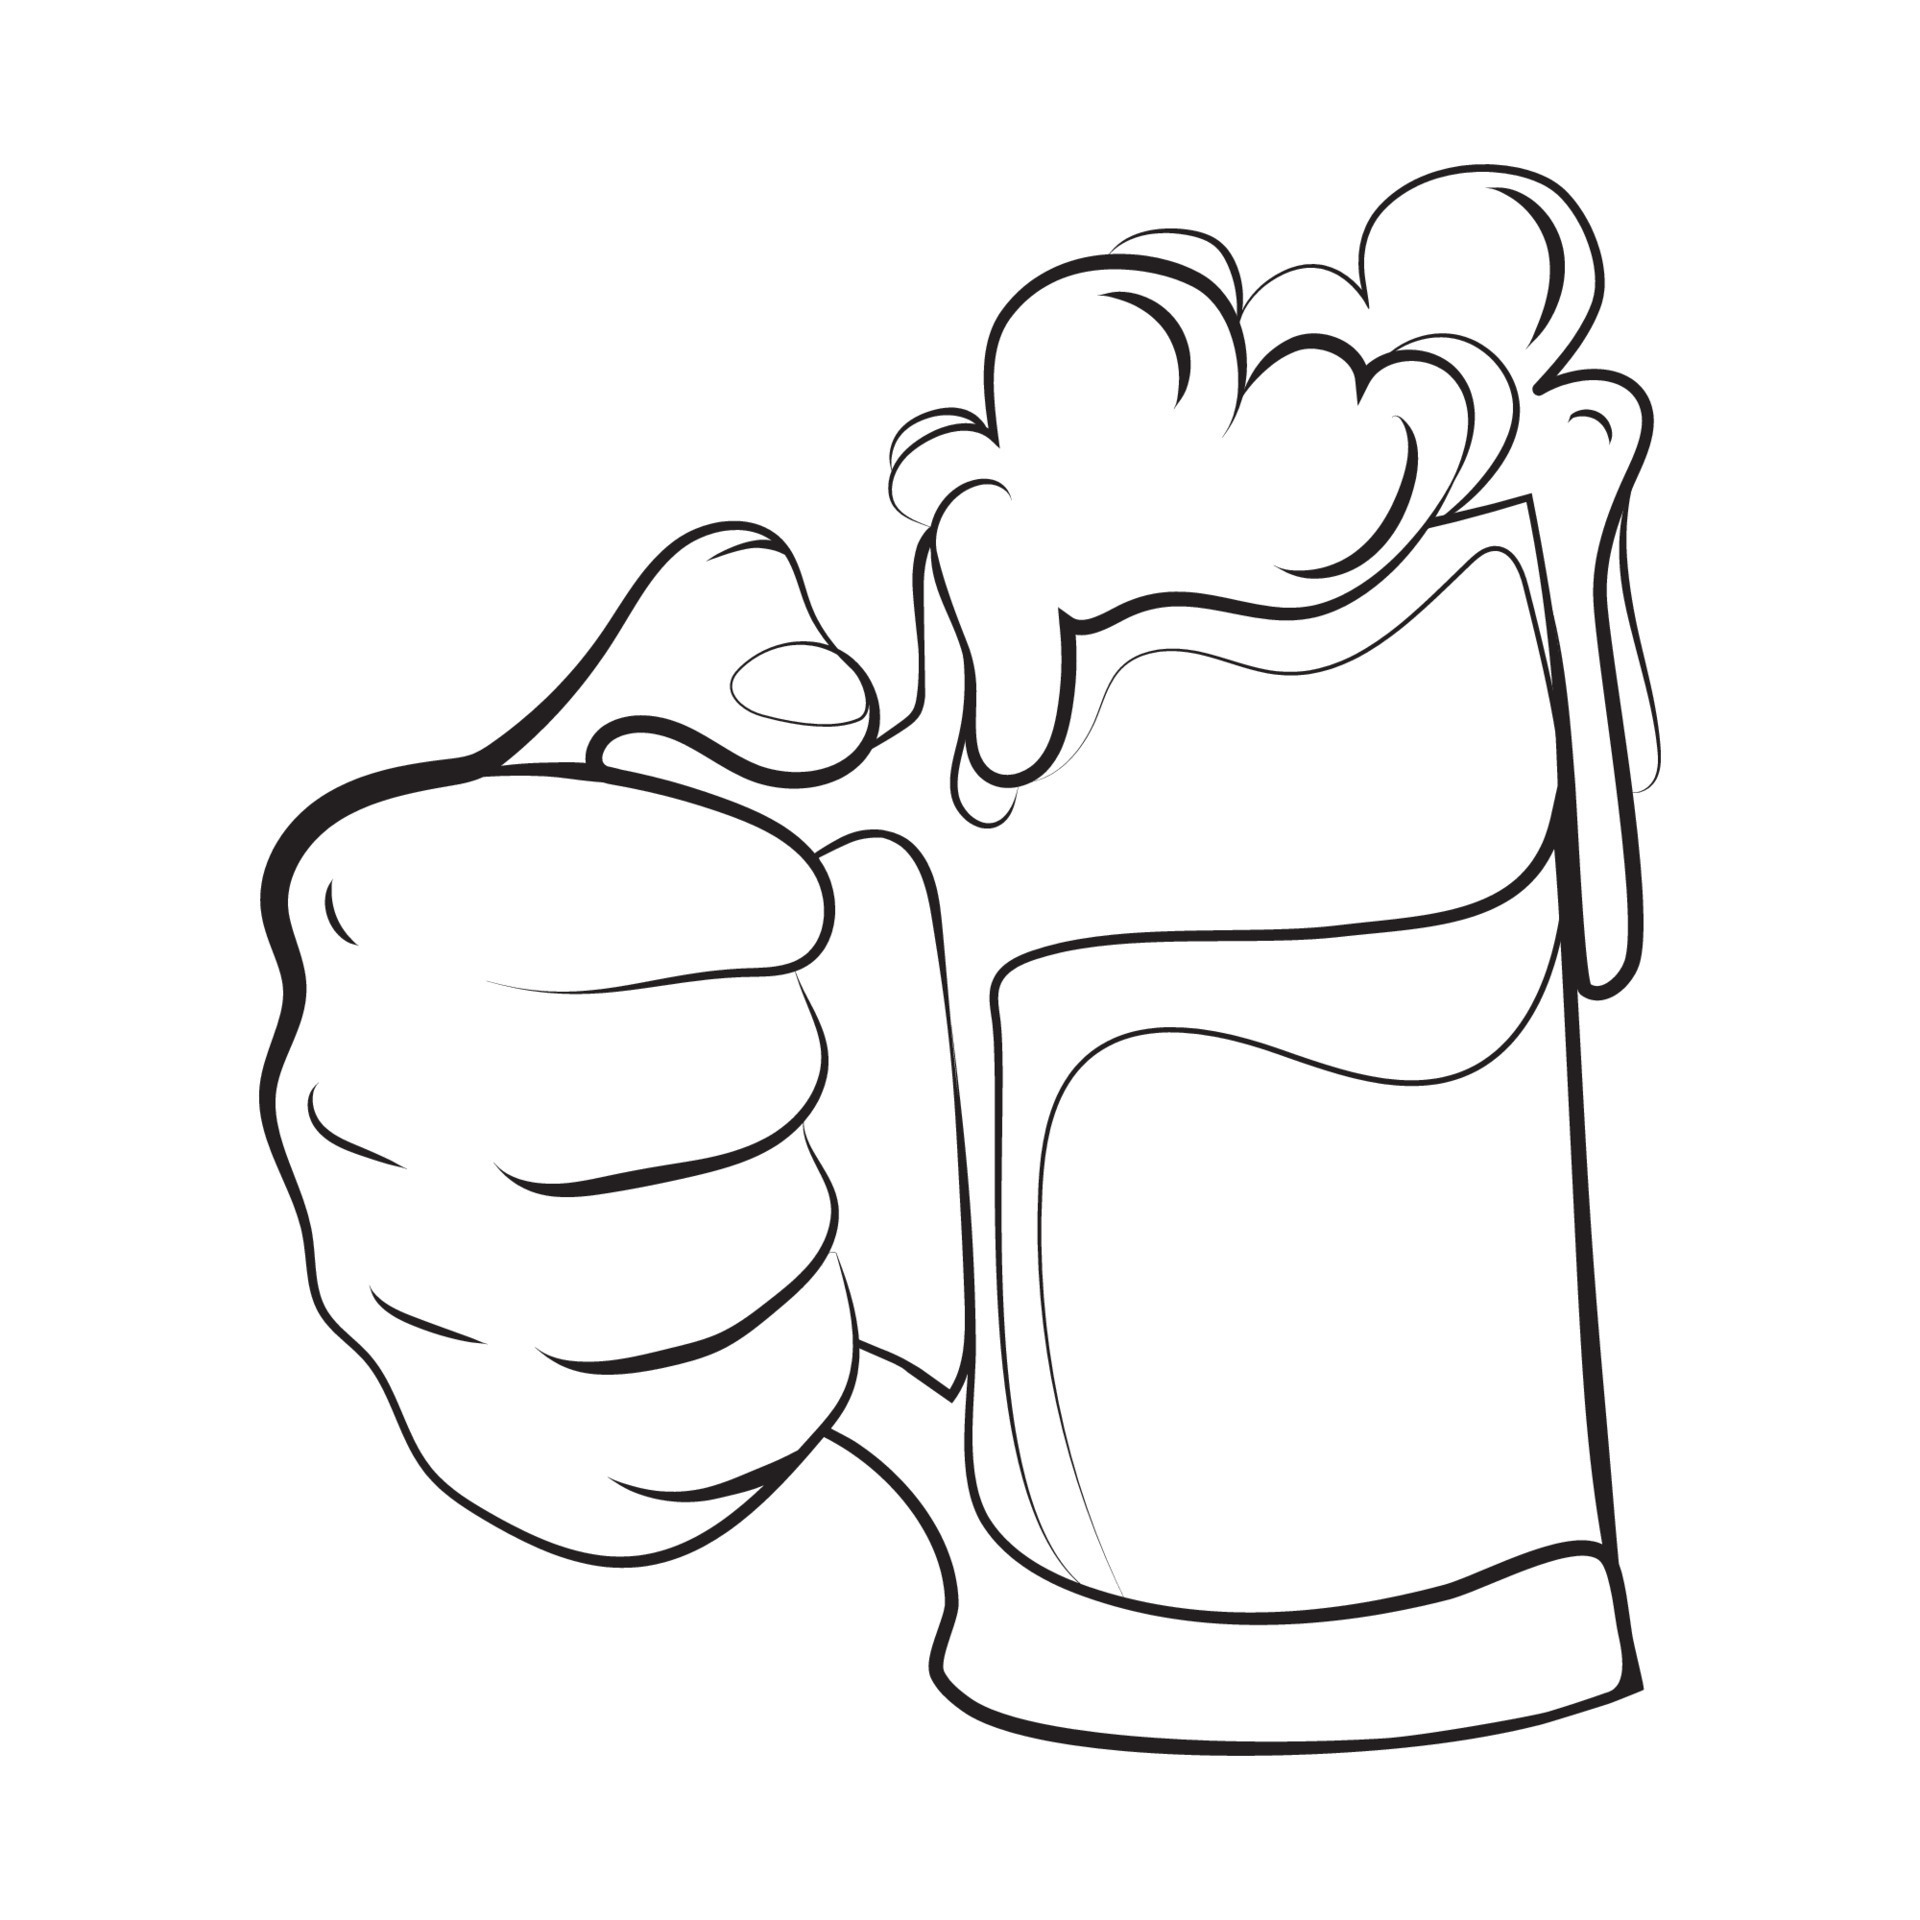 Premium Vector  Beer mug sketch style vector illustration old engraving  imitation beer cup hand drawn sketch